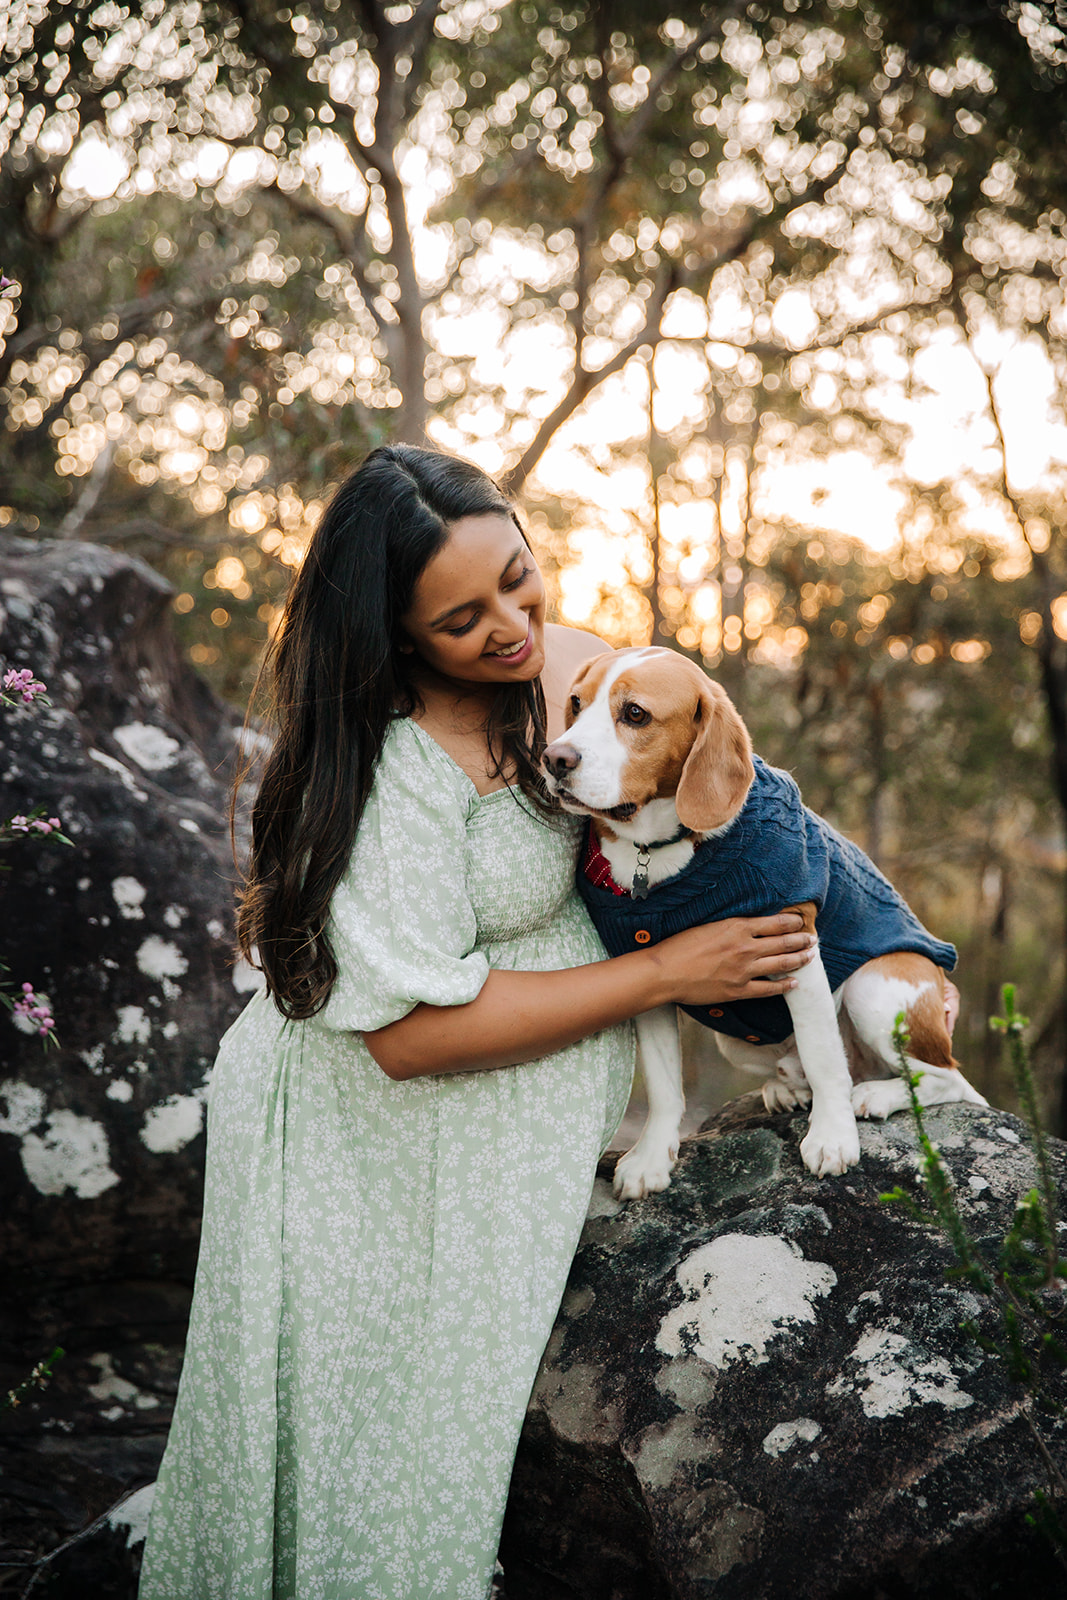 Sydney pregnancy photos with your dog